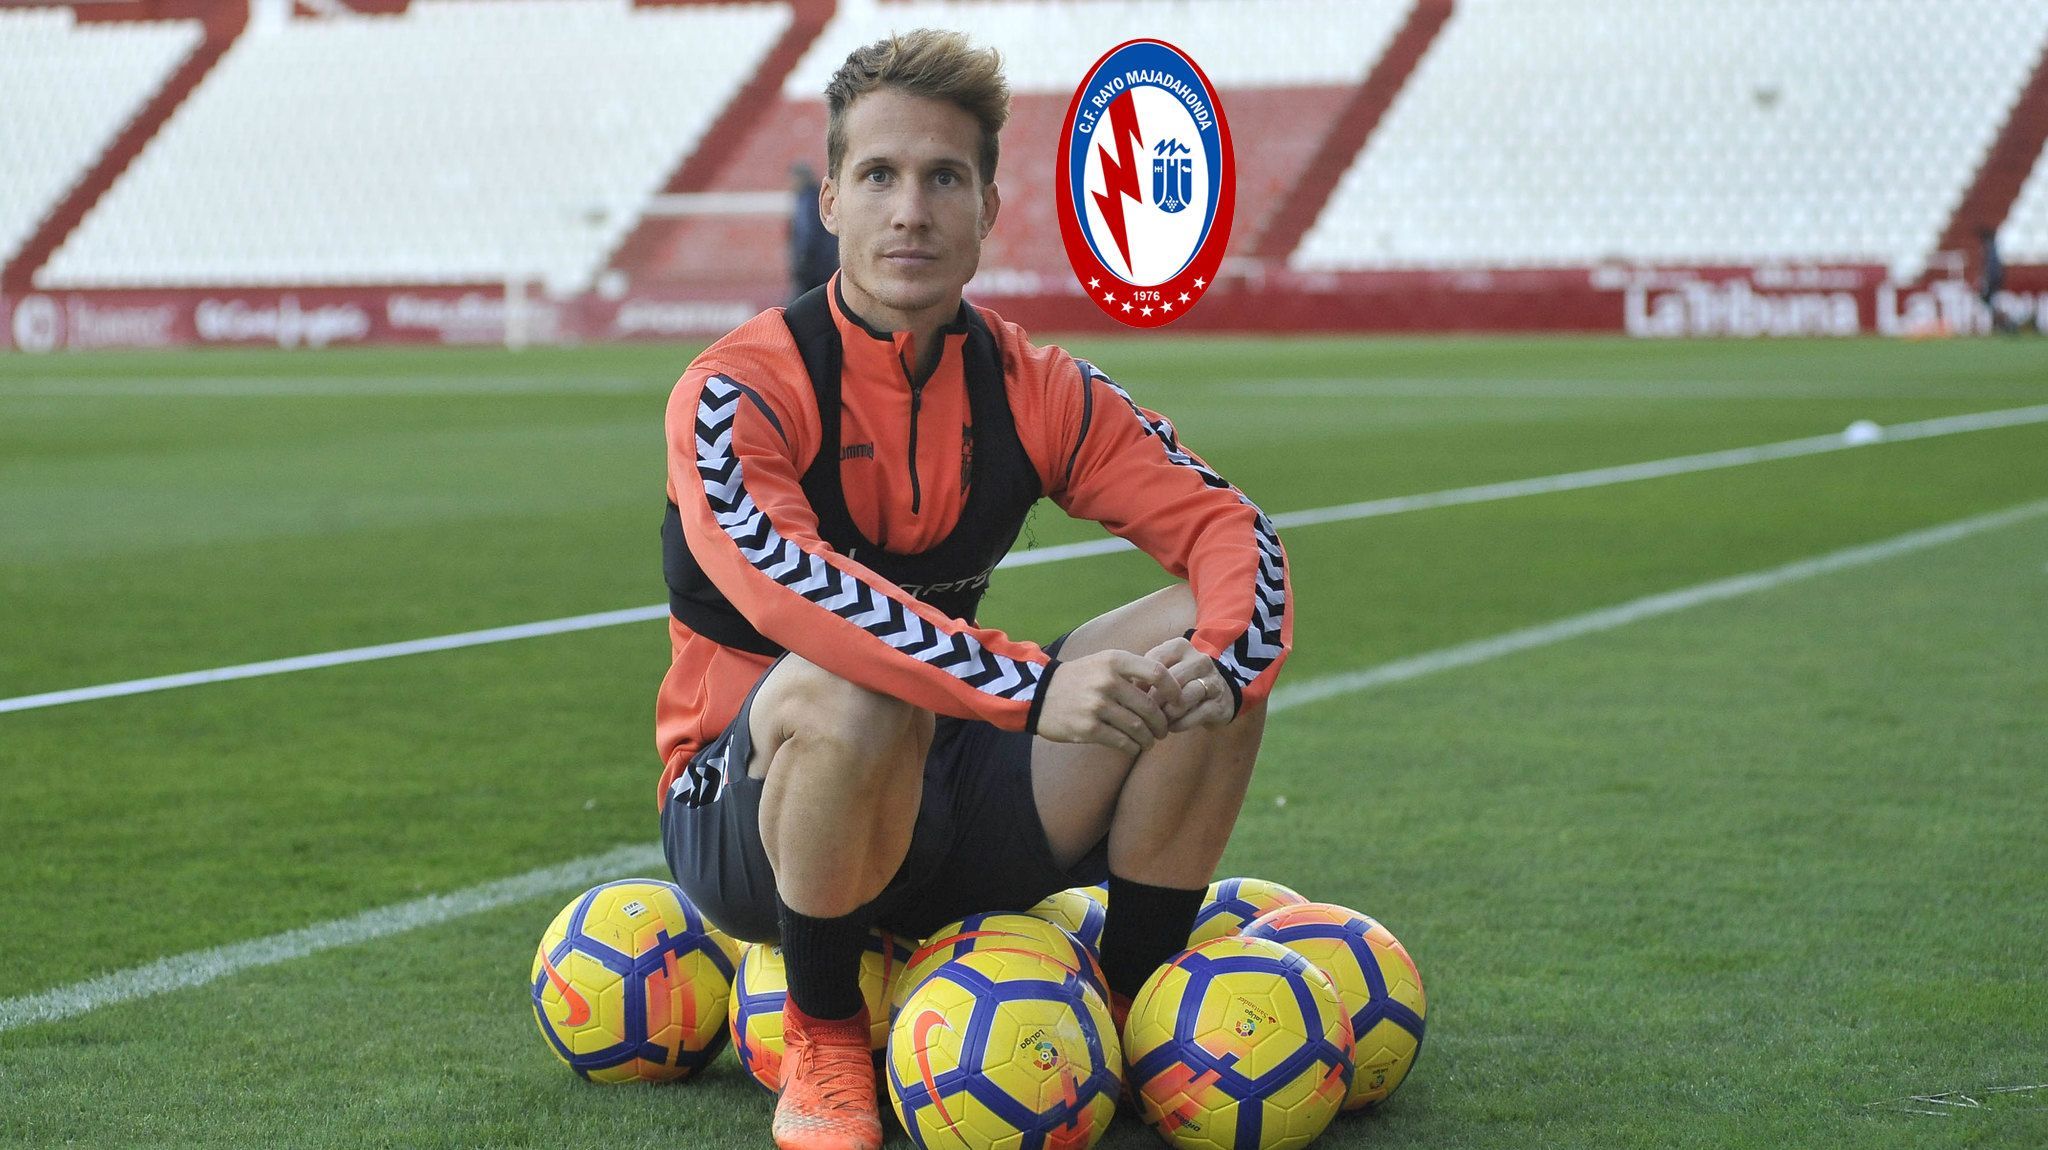 Fichaje: el vasco Néstor Susaeta, tercer capitán del Albacete, nuevo jugador del Rayo Majadahonda